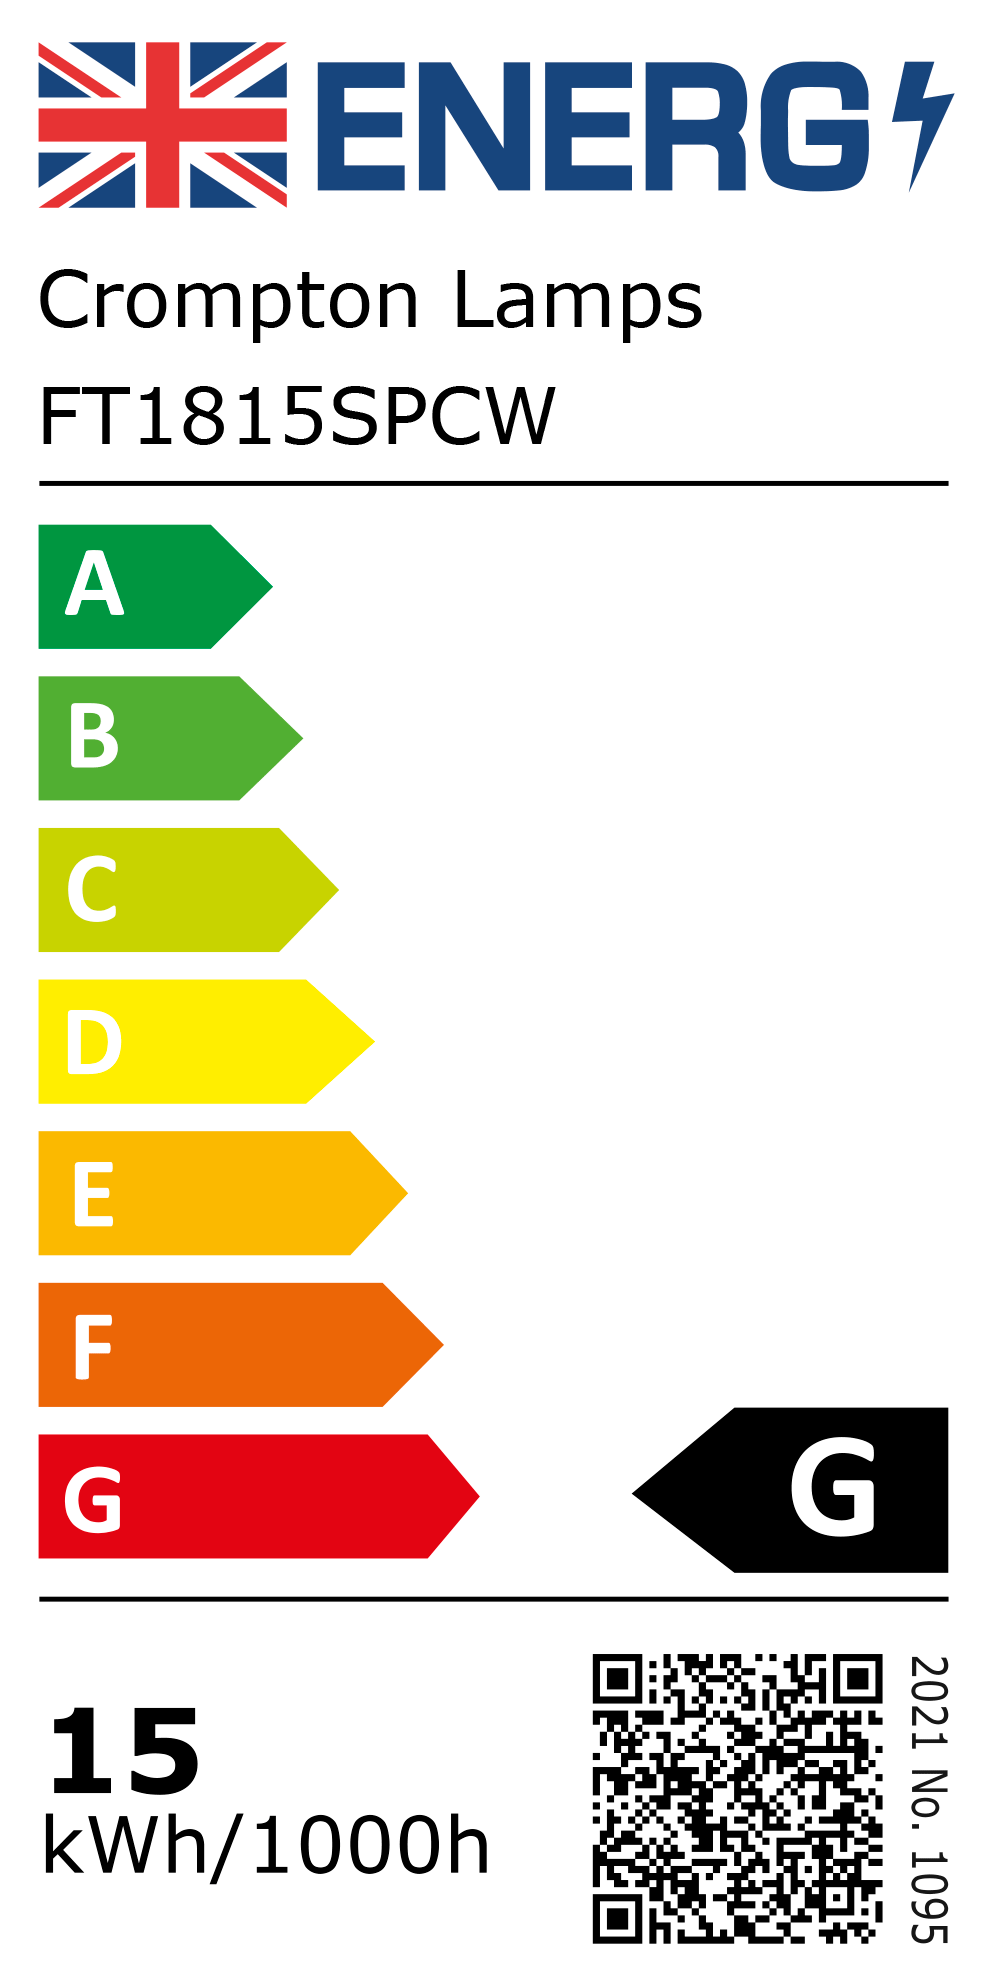 New 2021 Energy Rating Label: Stock Code FT1815SPCW